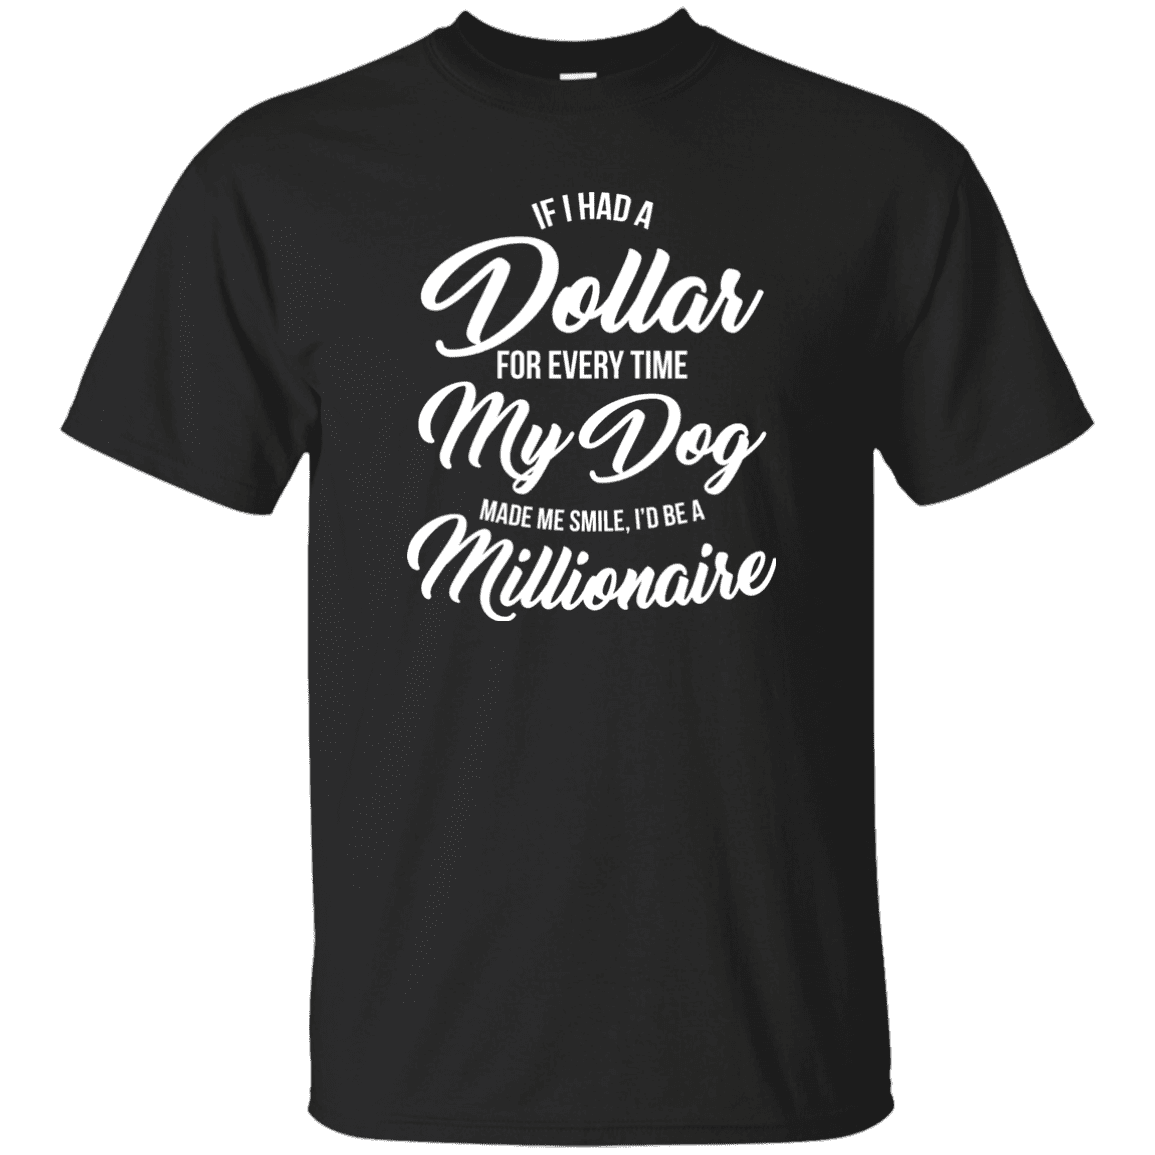 If I Had A Dollar - T Shirt.